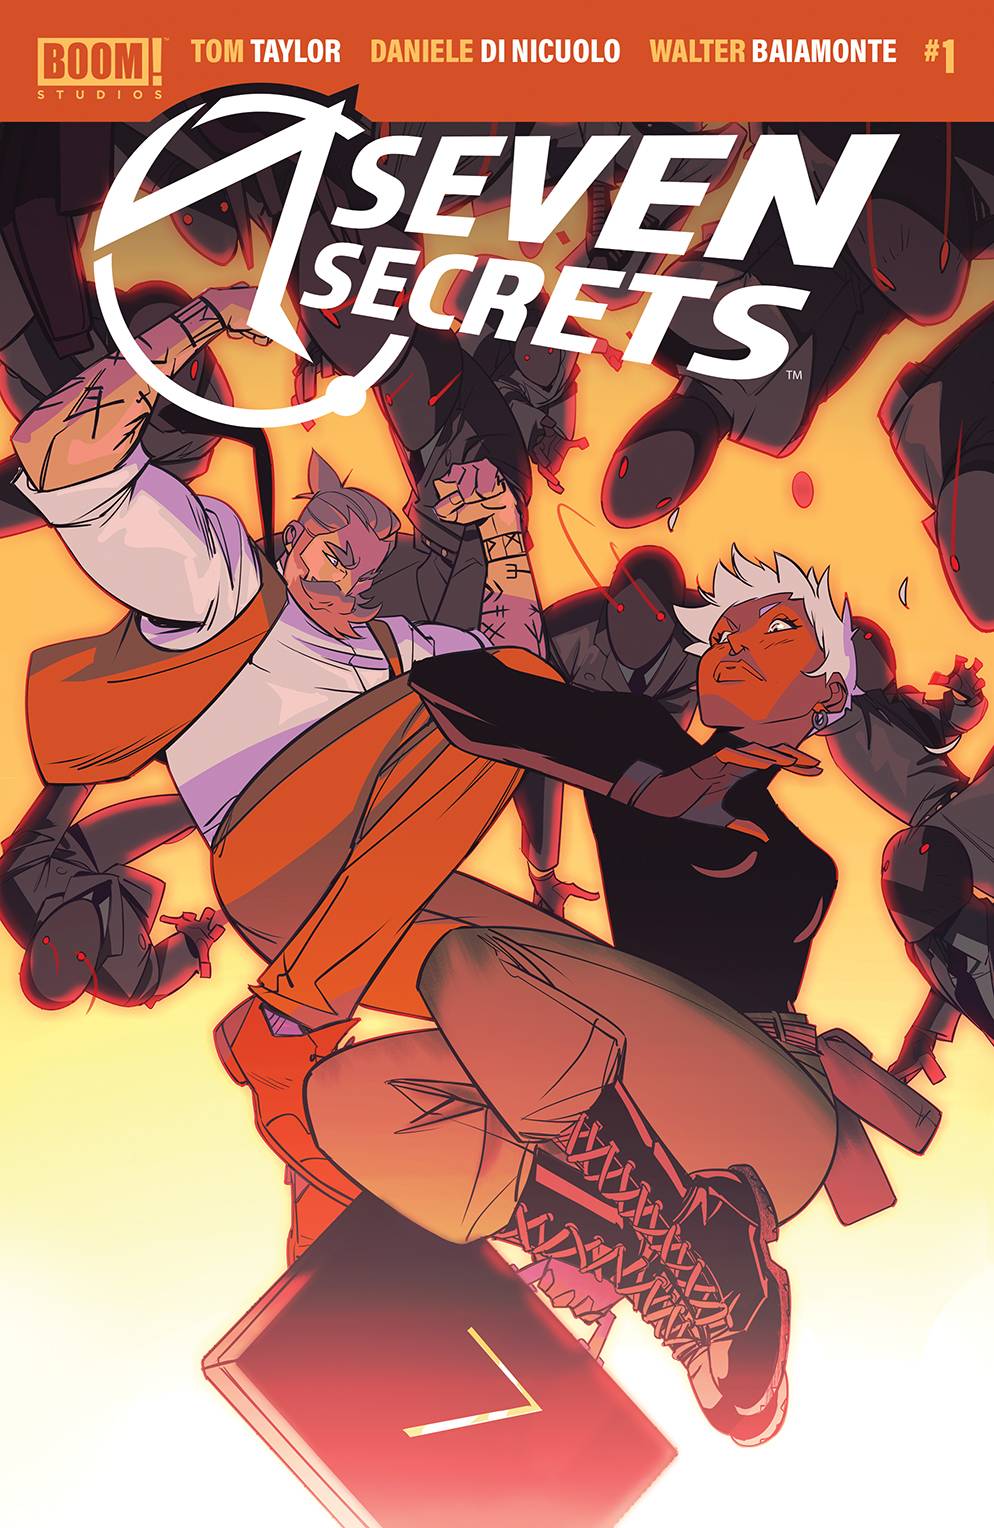 Seven Secrets 1 Comic Book NM